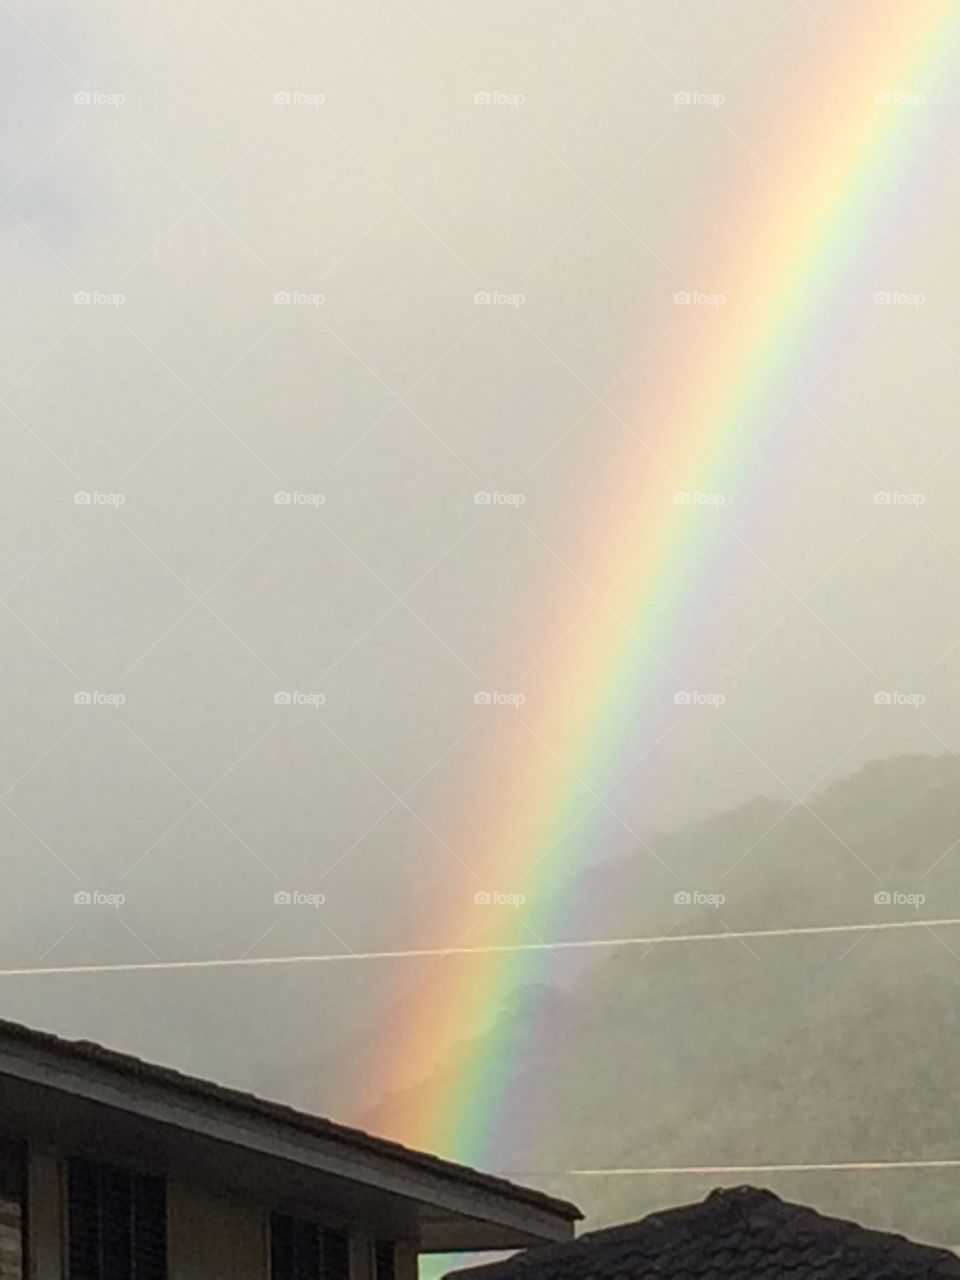 One of many rainbows in Honolulu, Hawaii. The clearest rainbow ever seen.